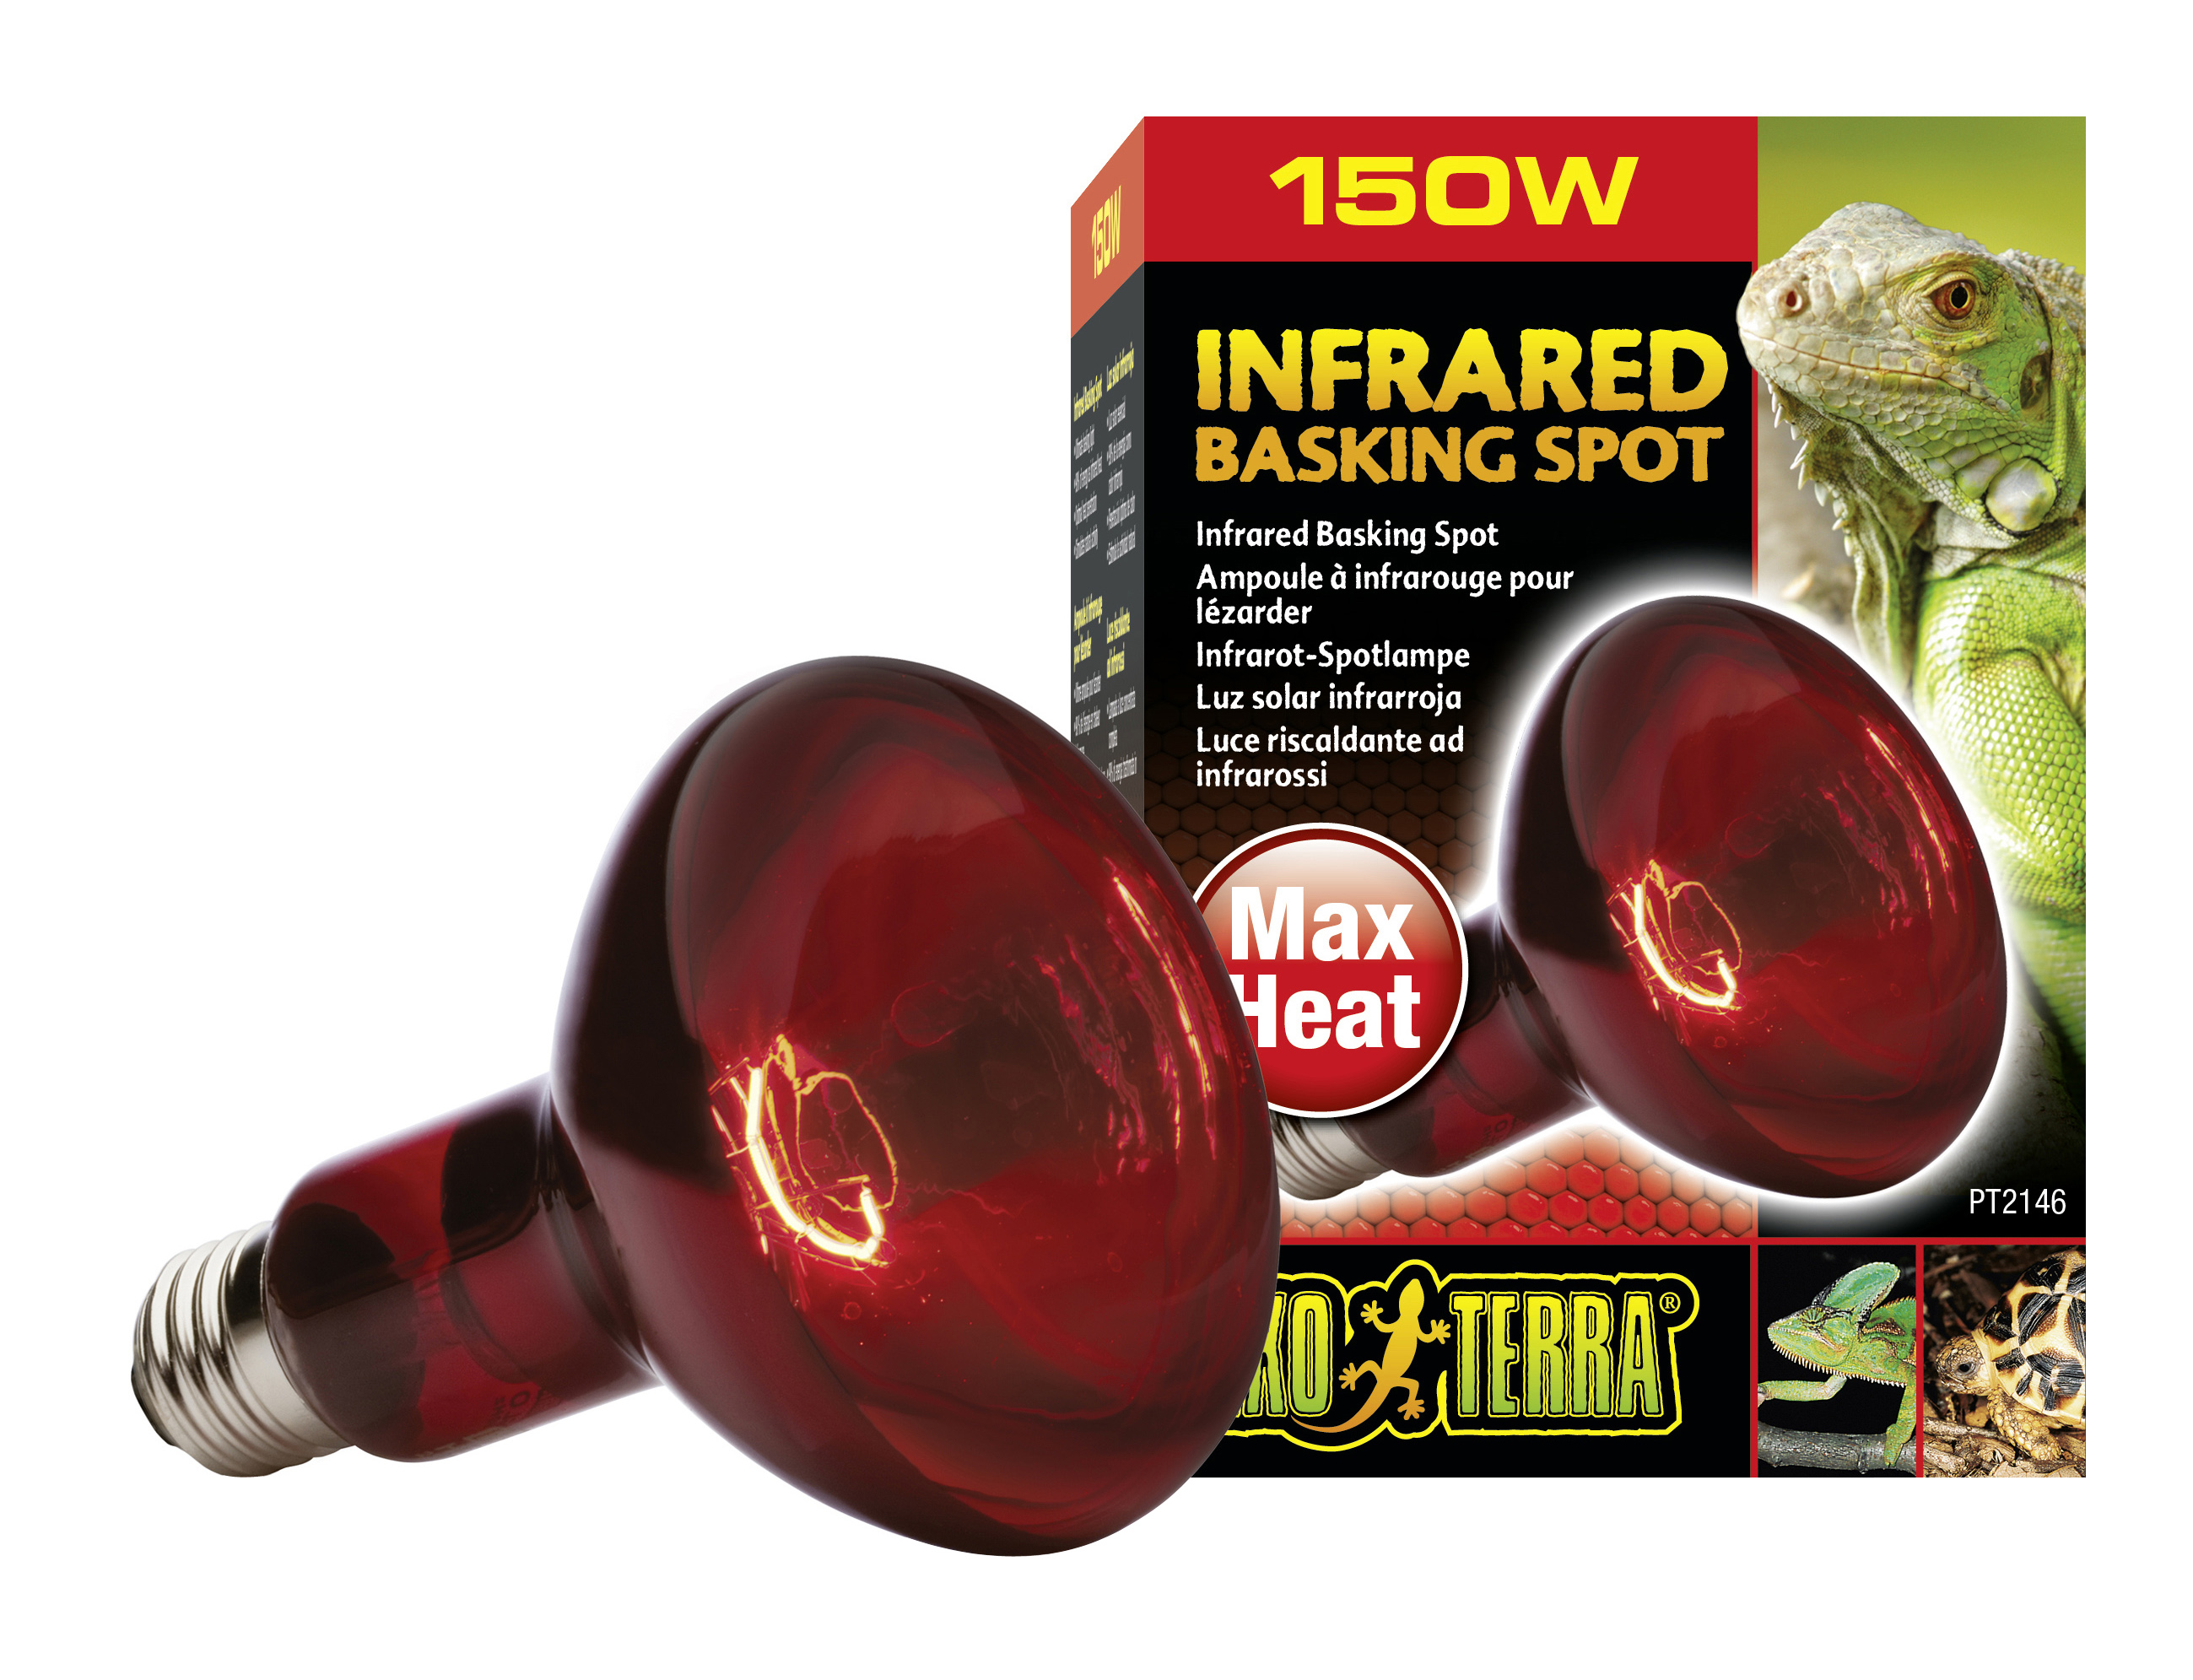 Ex infrarot-spotlampe heat gl r30 - Product shot